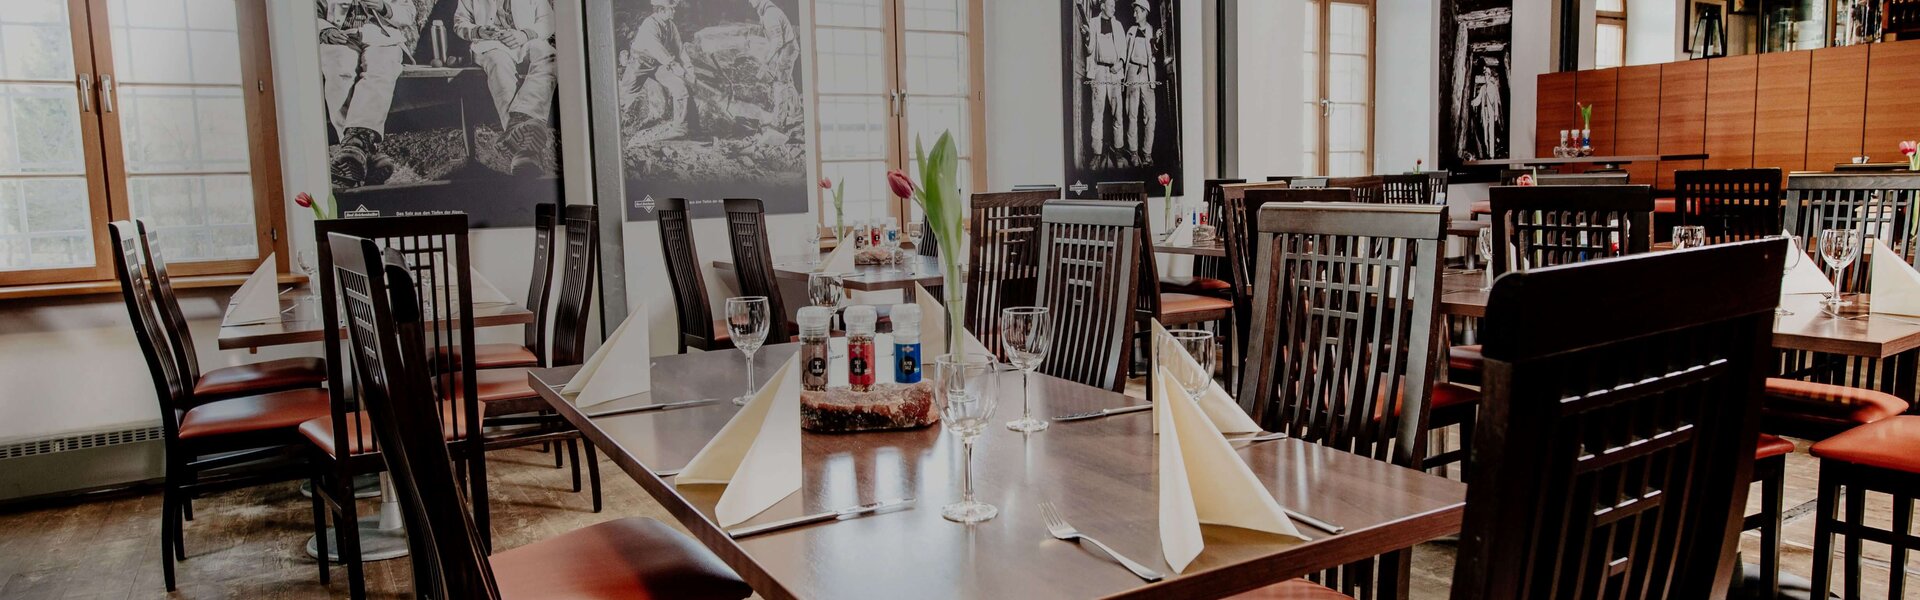 Tables at the Bergsch?nke restaurant 